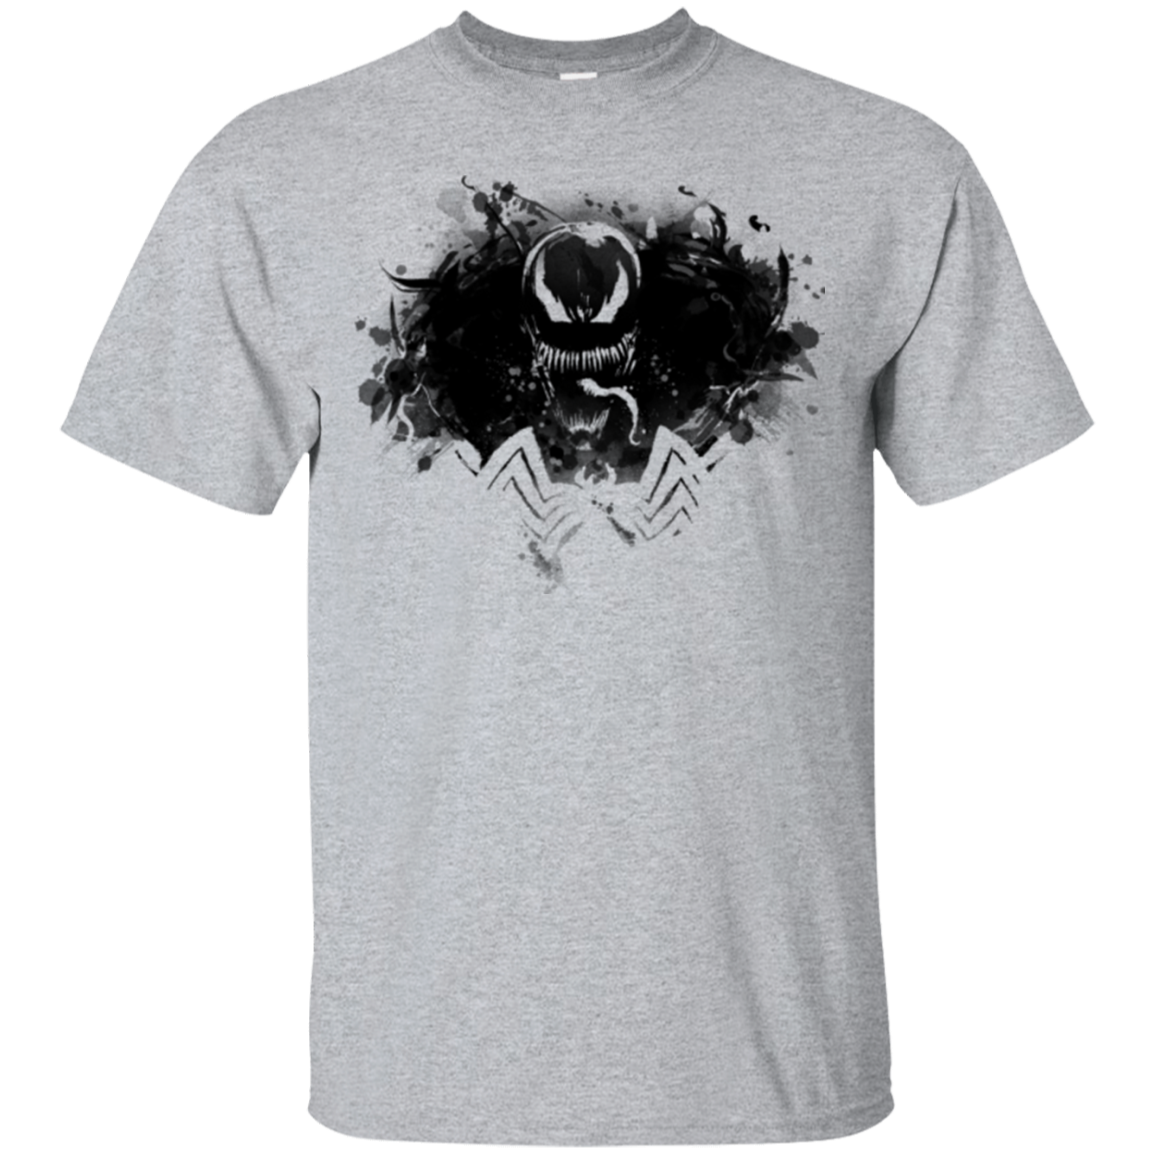 The Symbiote T-Shirt